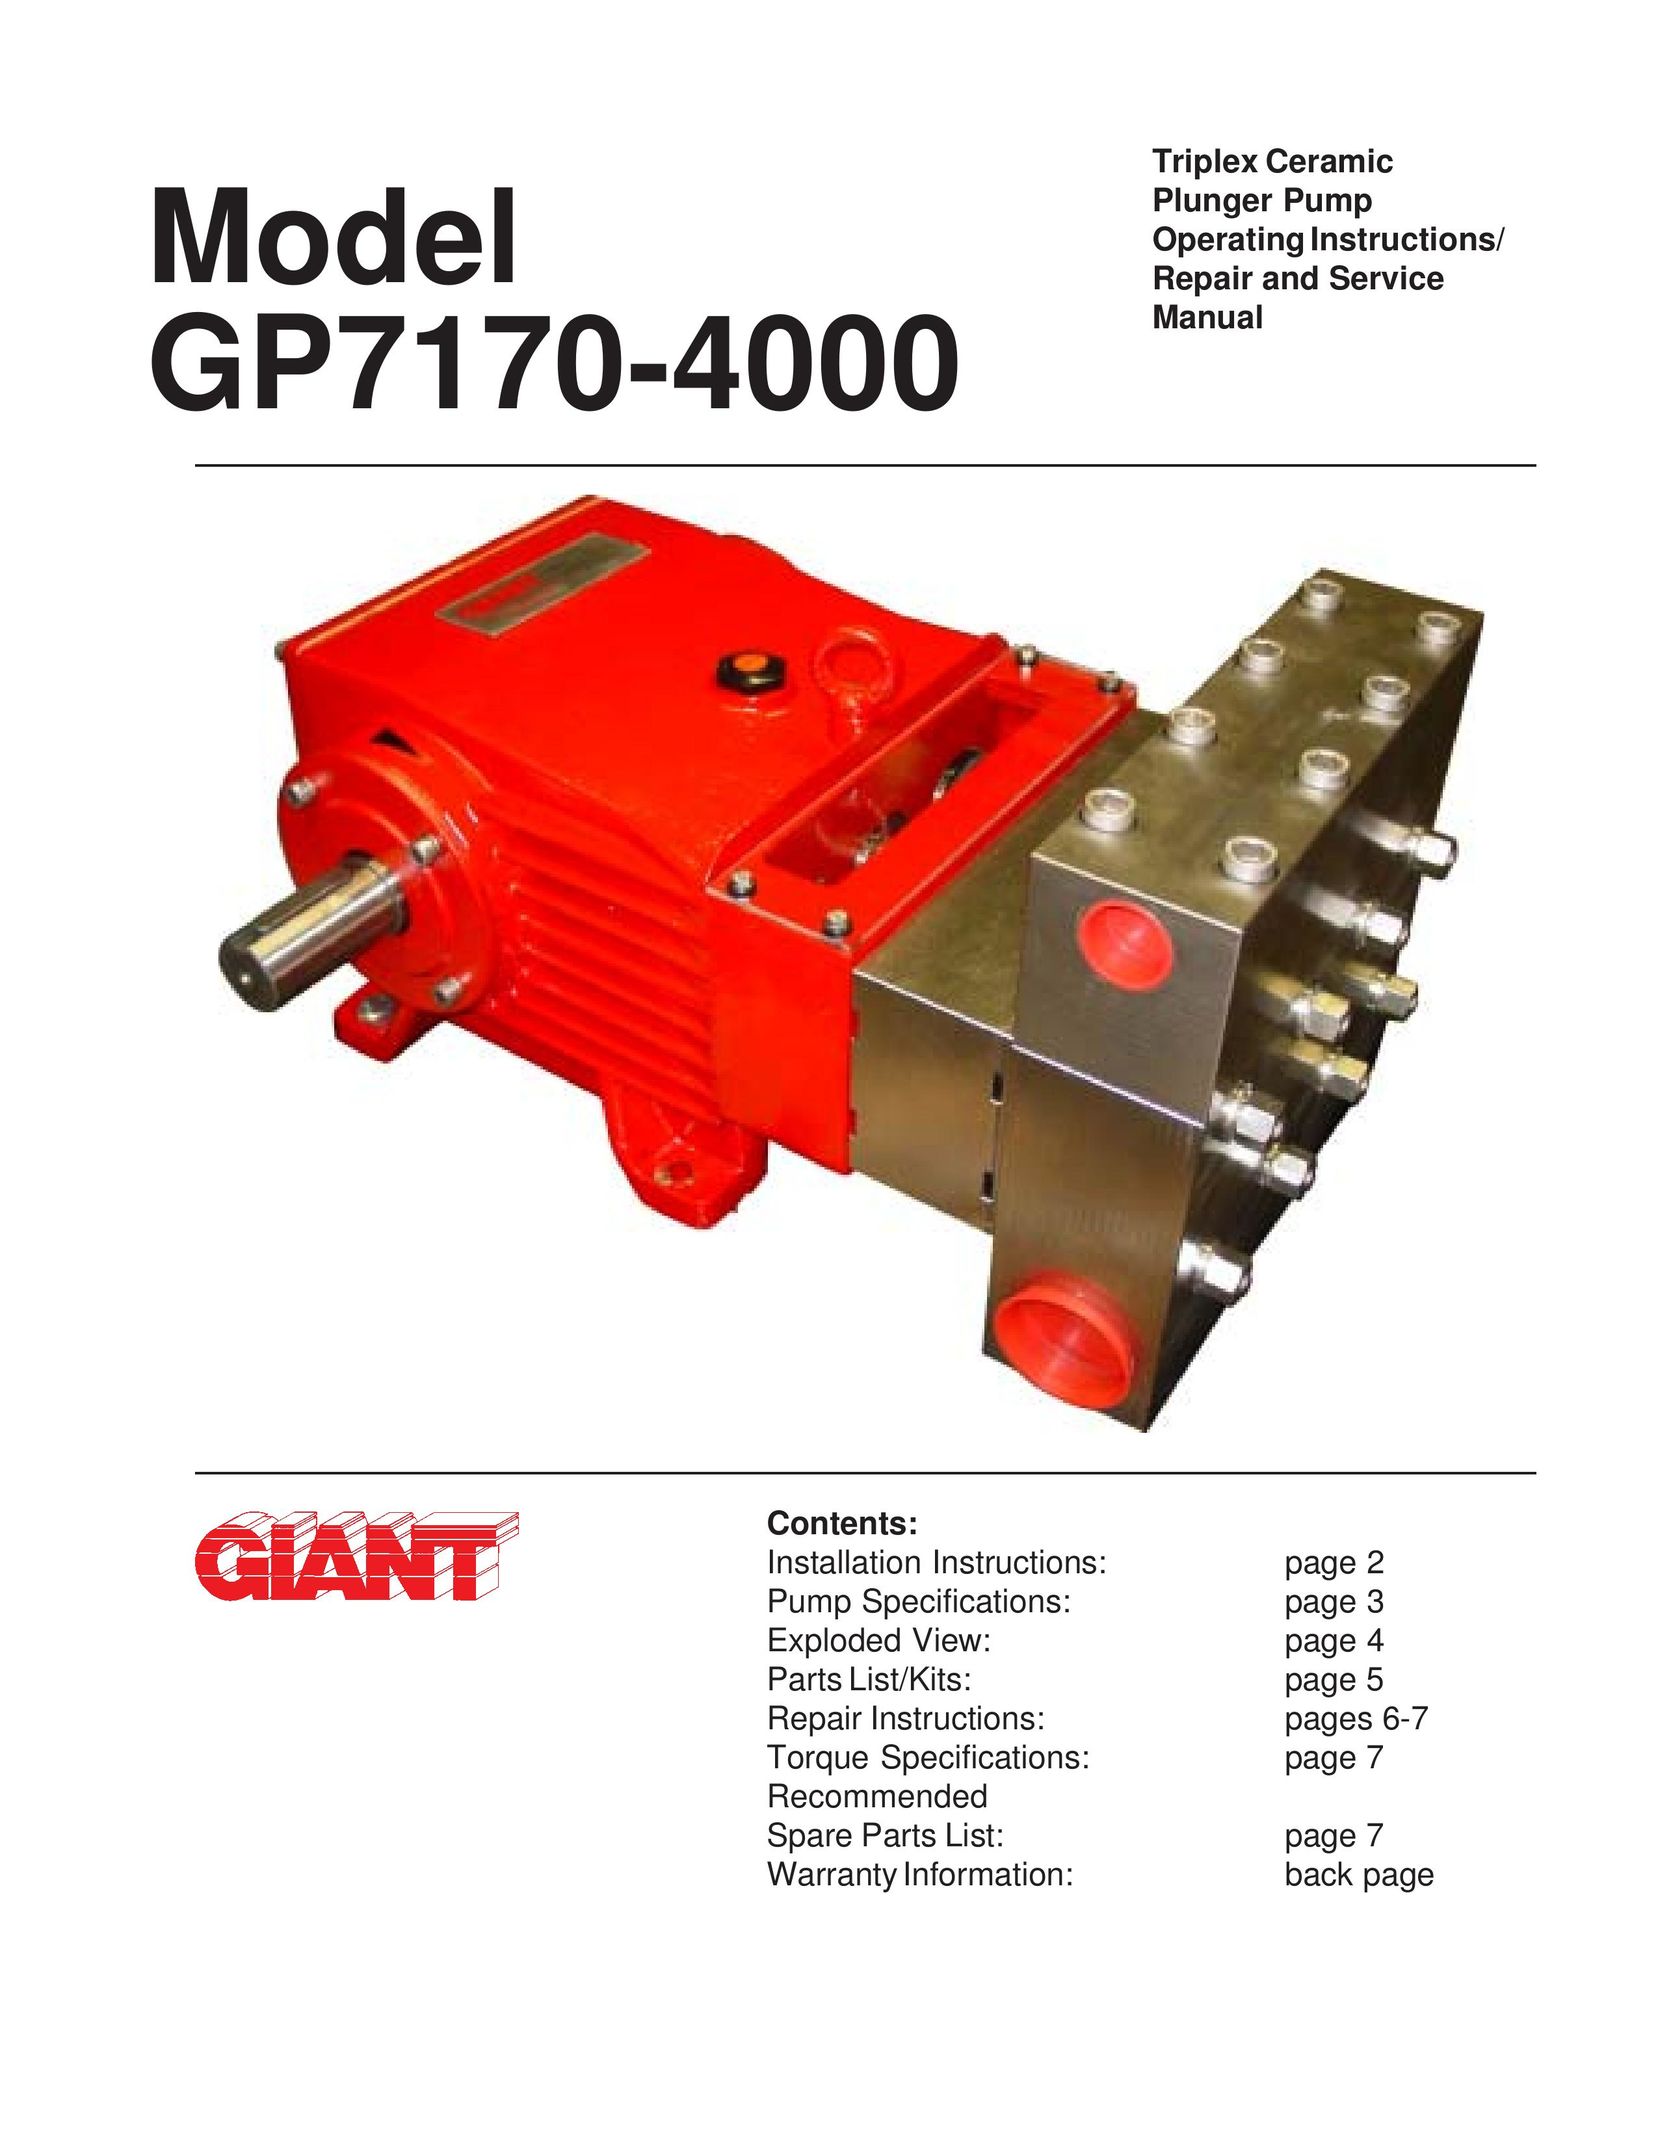 Giant GP7170-4000 Heat Pump User Manual